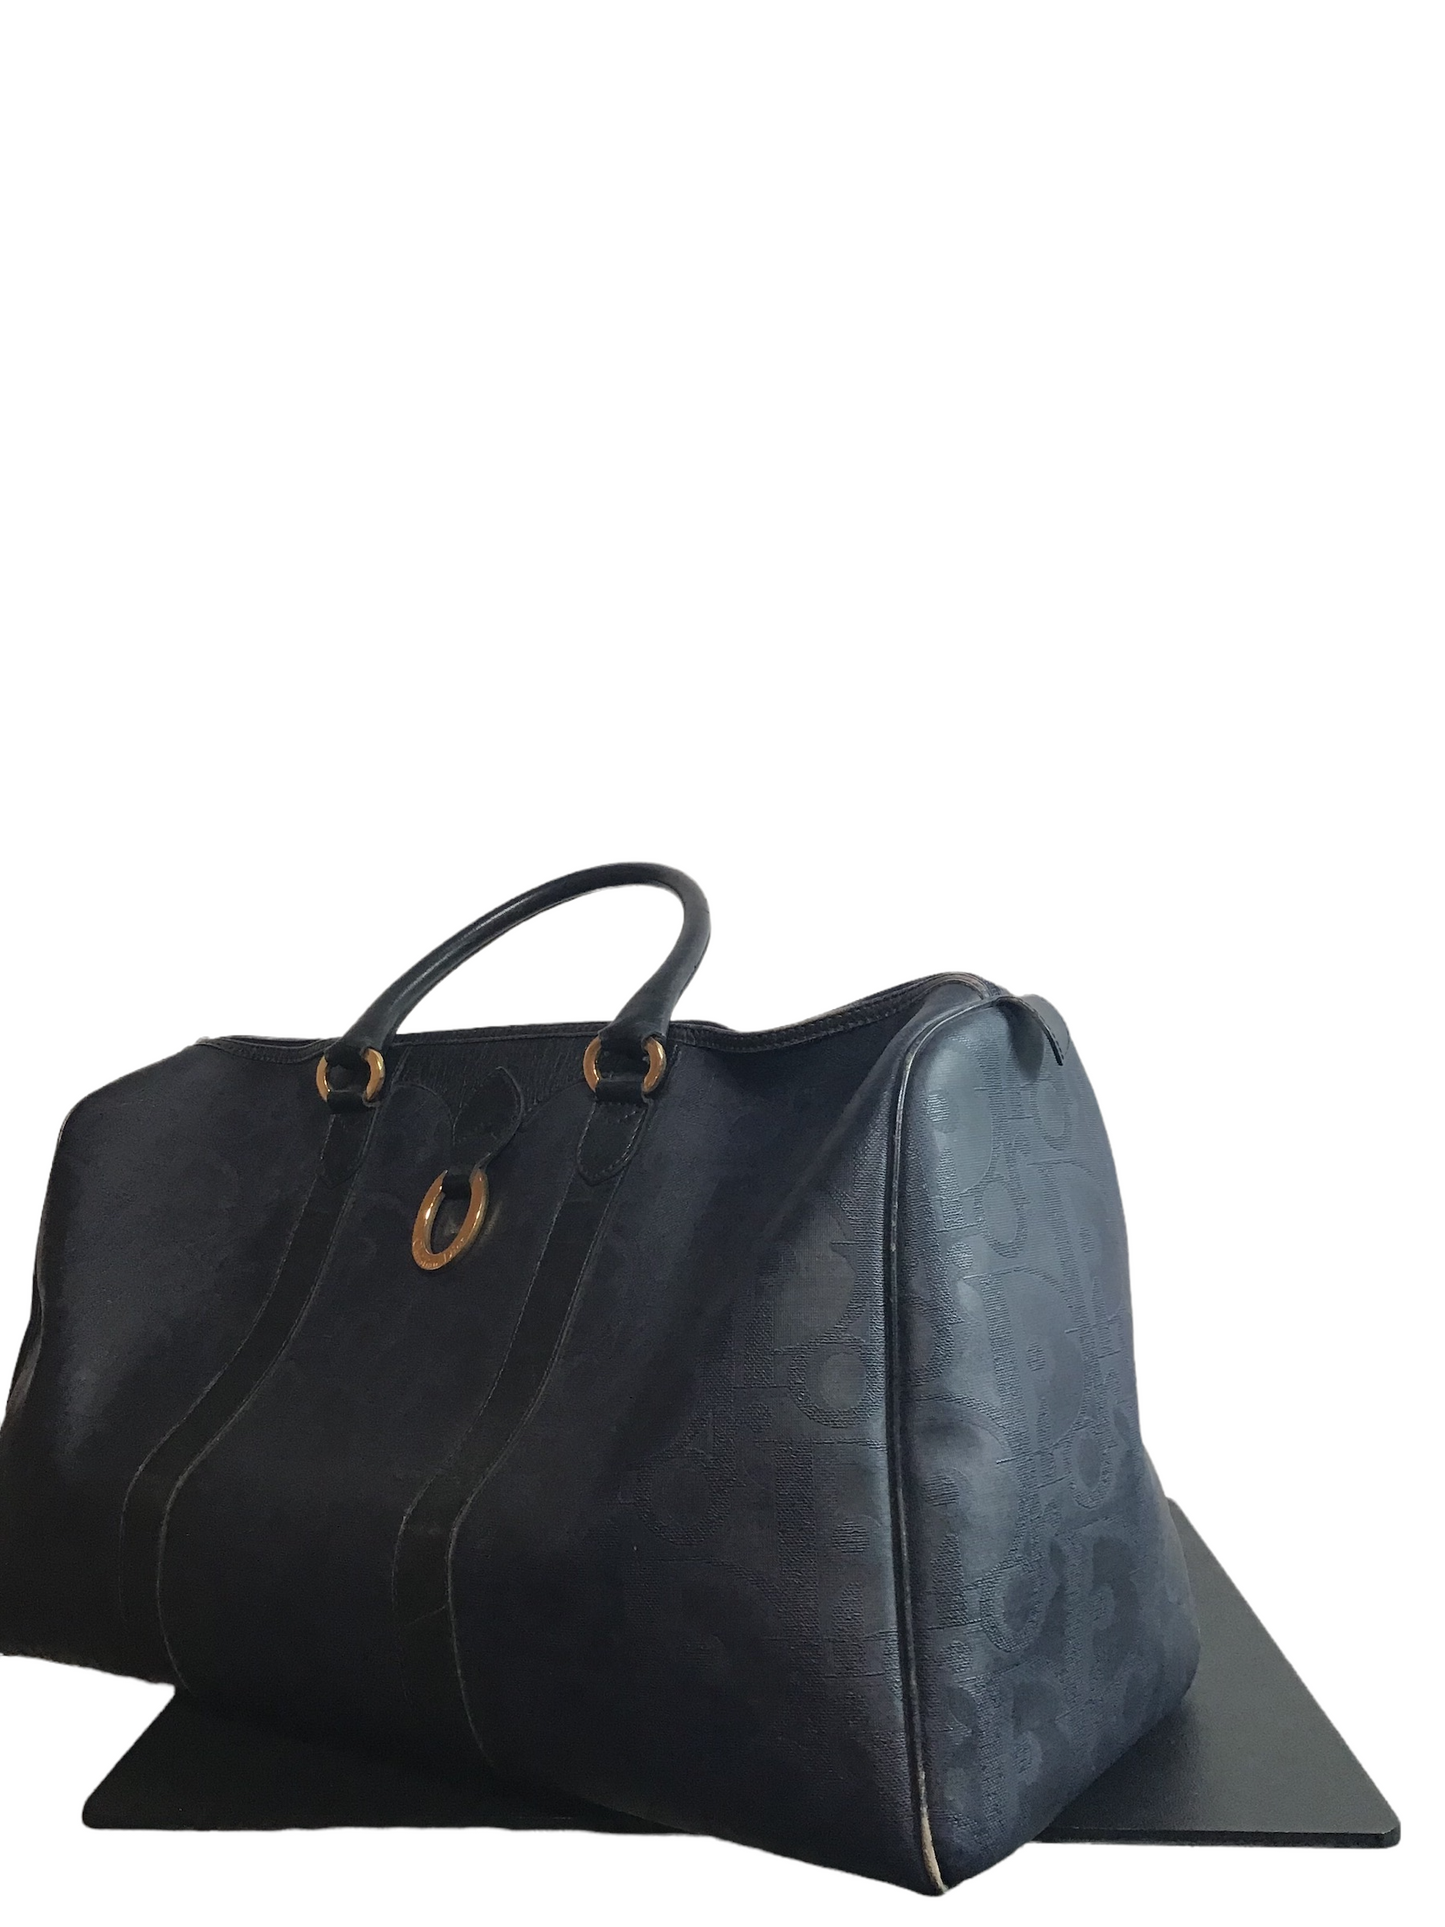 Christian Dior Navy Trotter Duffle Bag